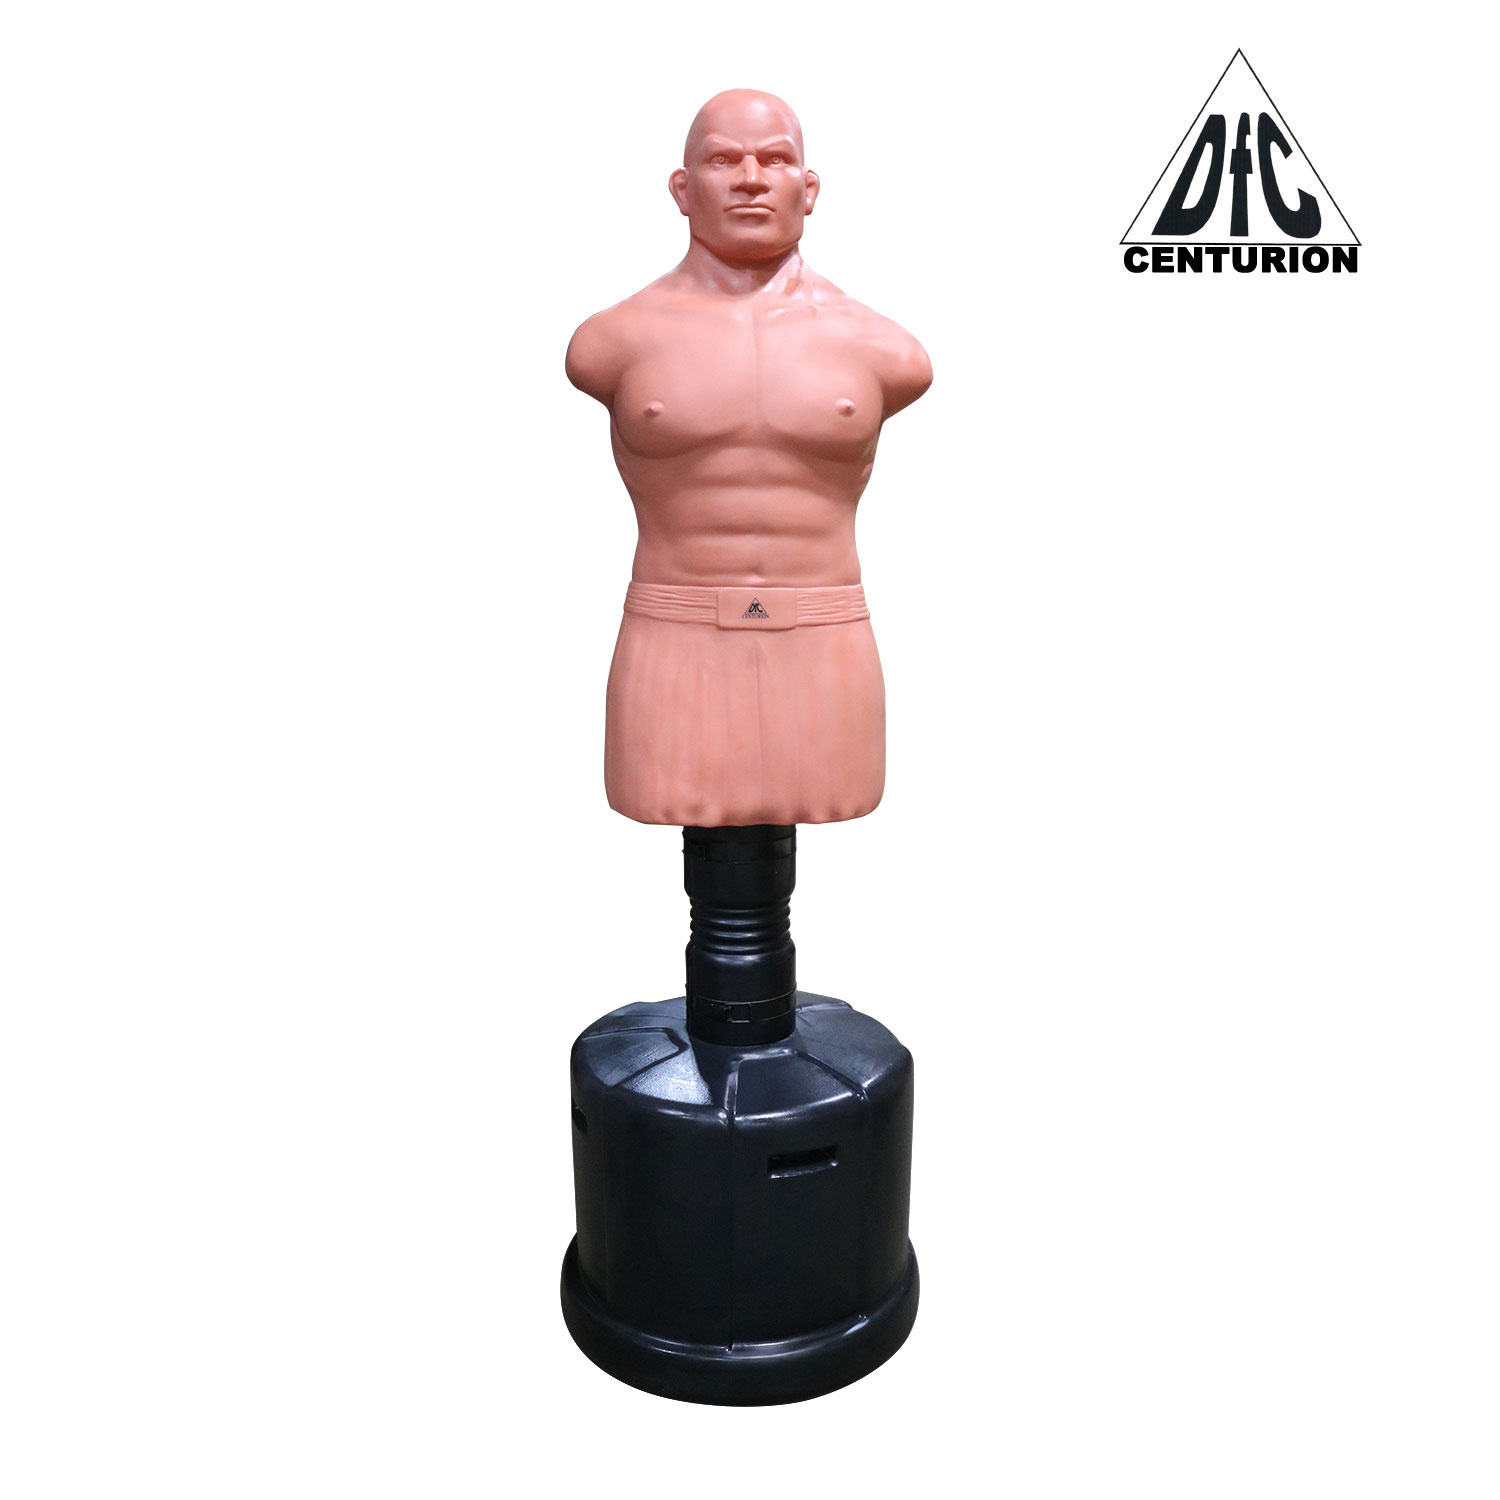 DFC Centurion Boxing Punching Man-Heavy водоналивной - бежевый из каталога манекенов для бокса в Челябинске по цене 45990 ₽